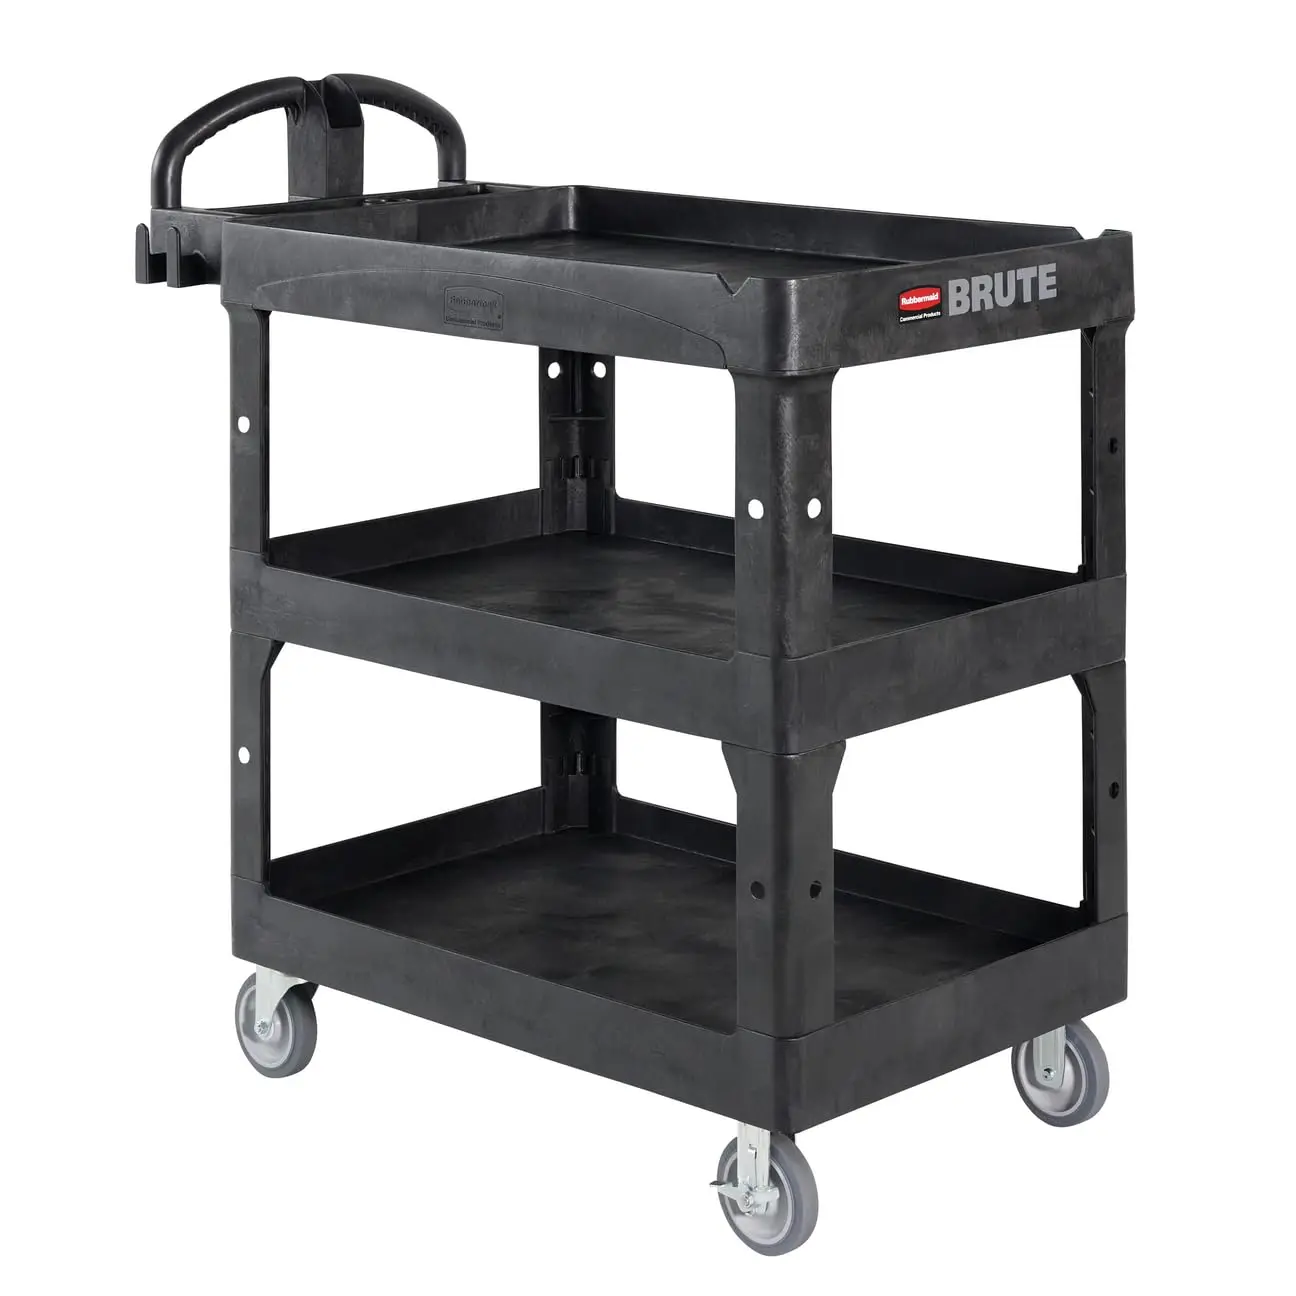 

Heavy Duty 3-Shelf Utility/Service Cart, High Storage, Medium, Lipped Shelves, Ergonomic Handle, 600 lbs Capacity, for Warehouse